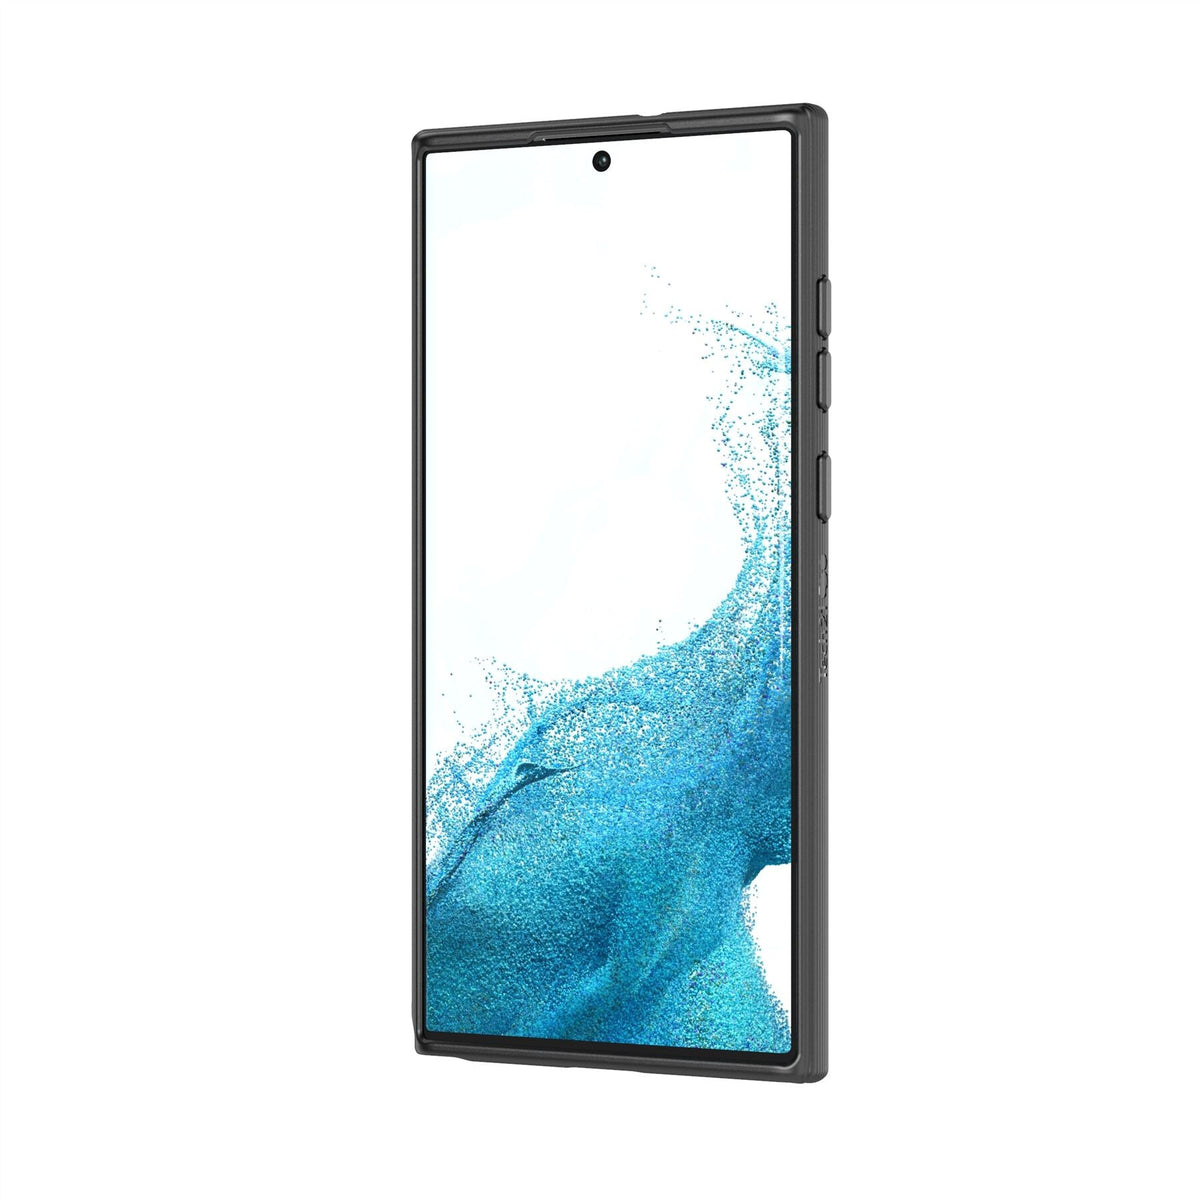 Tech21 Evo Lite mobile phone case for Galaxy S22 Ultra in Black